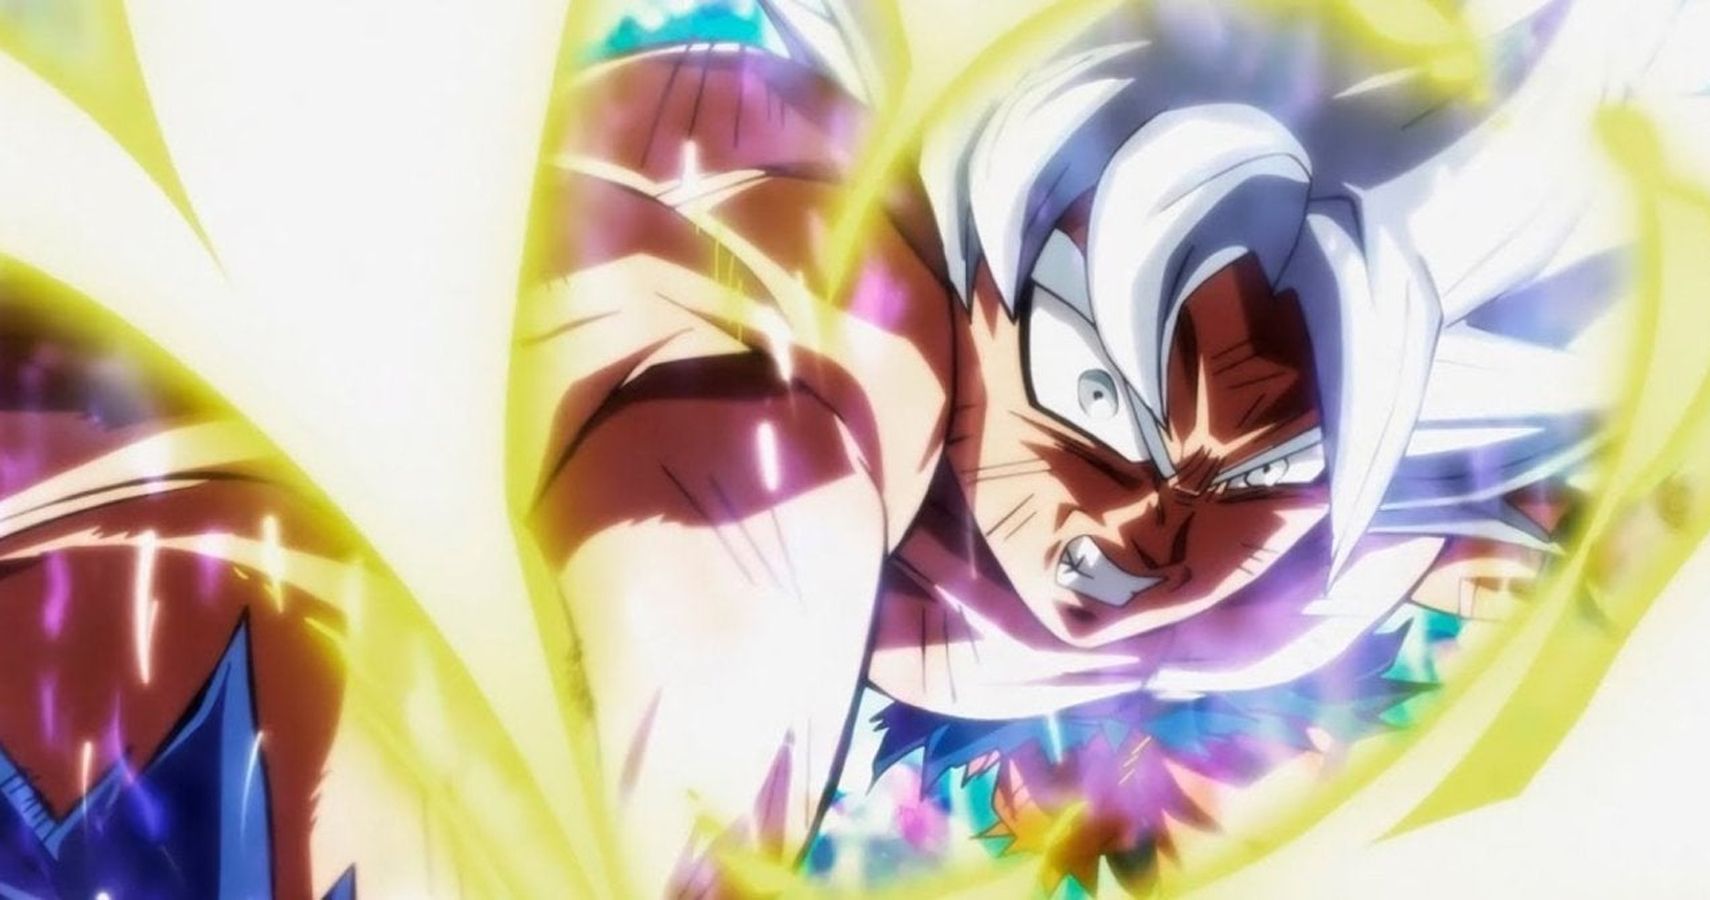 Ultra Instinct Goku Powers Up Dragon Ball FighterZ On May 22